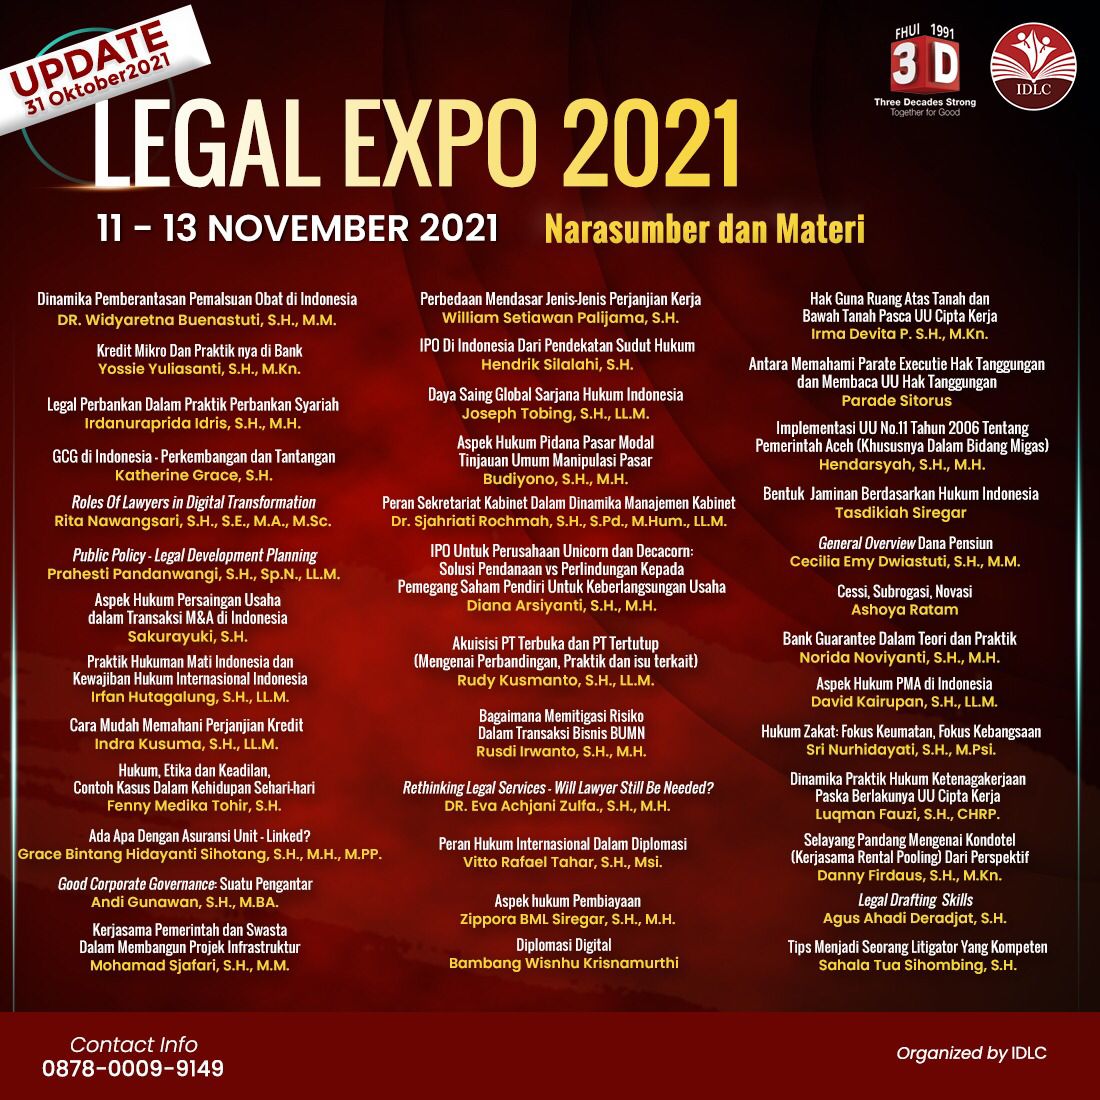 Legal Expo 2021 a